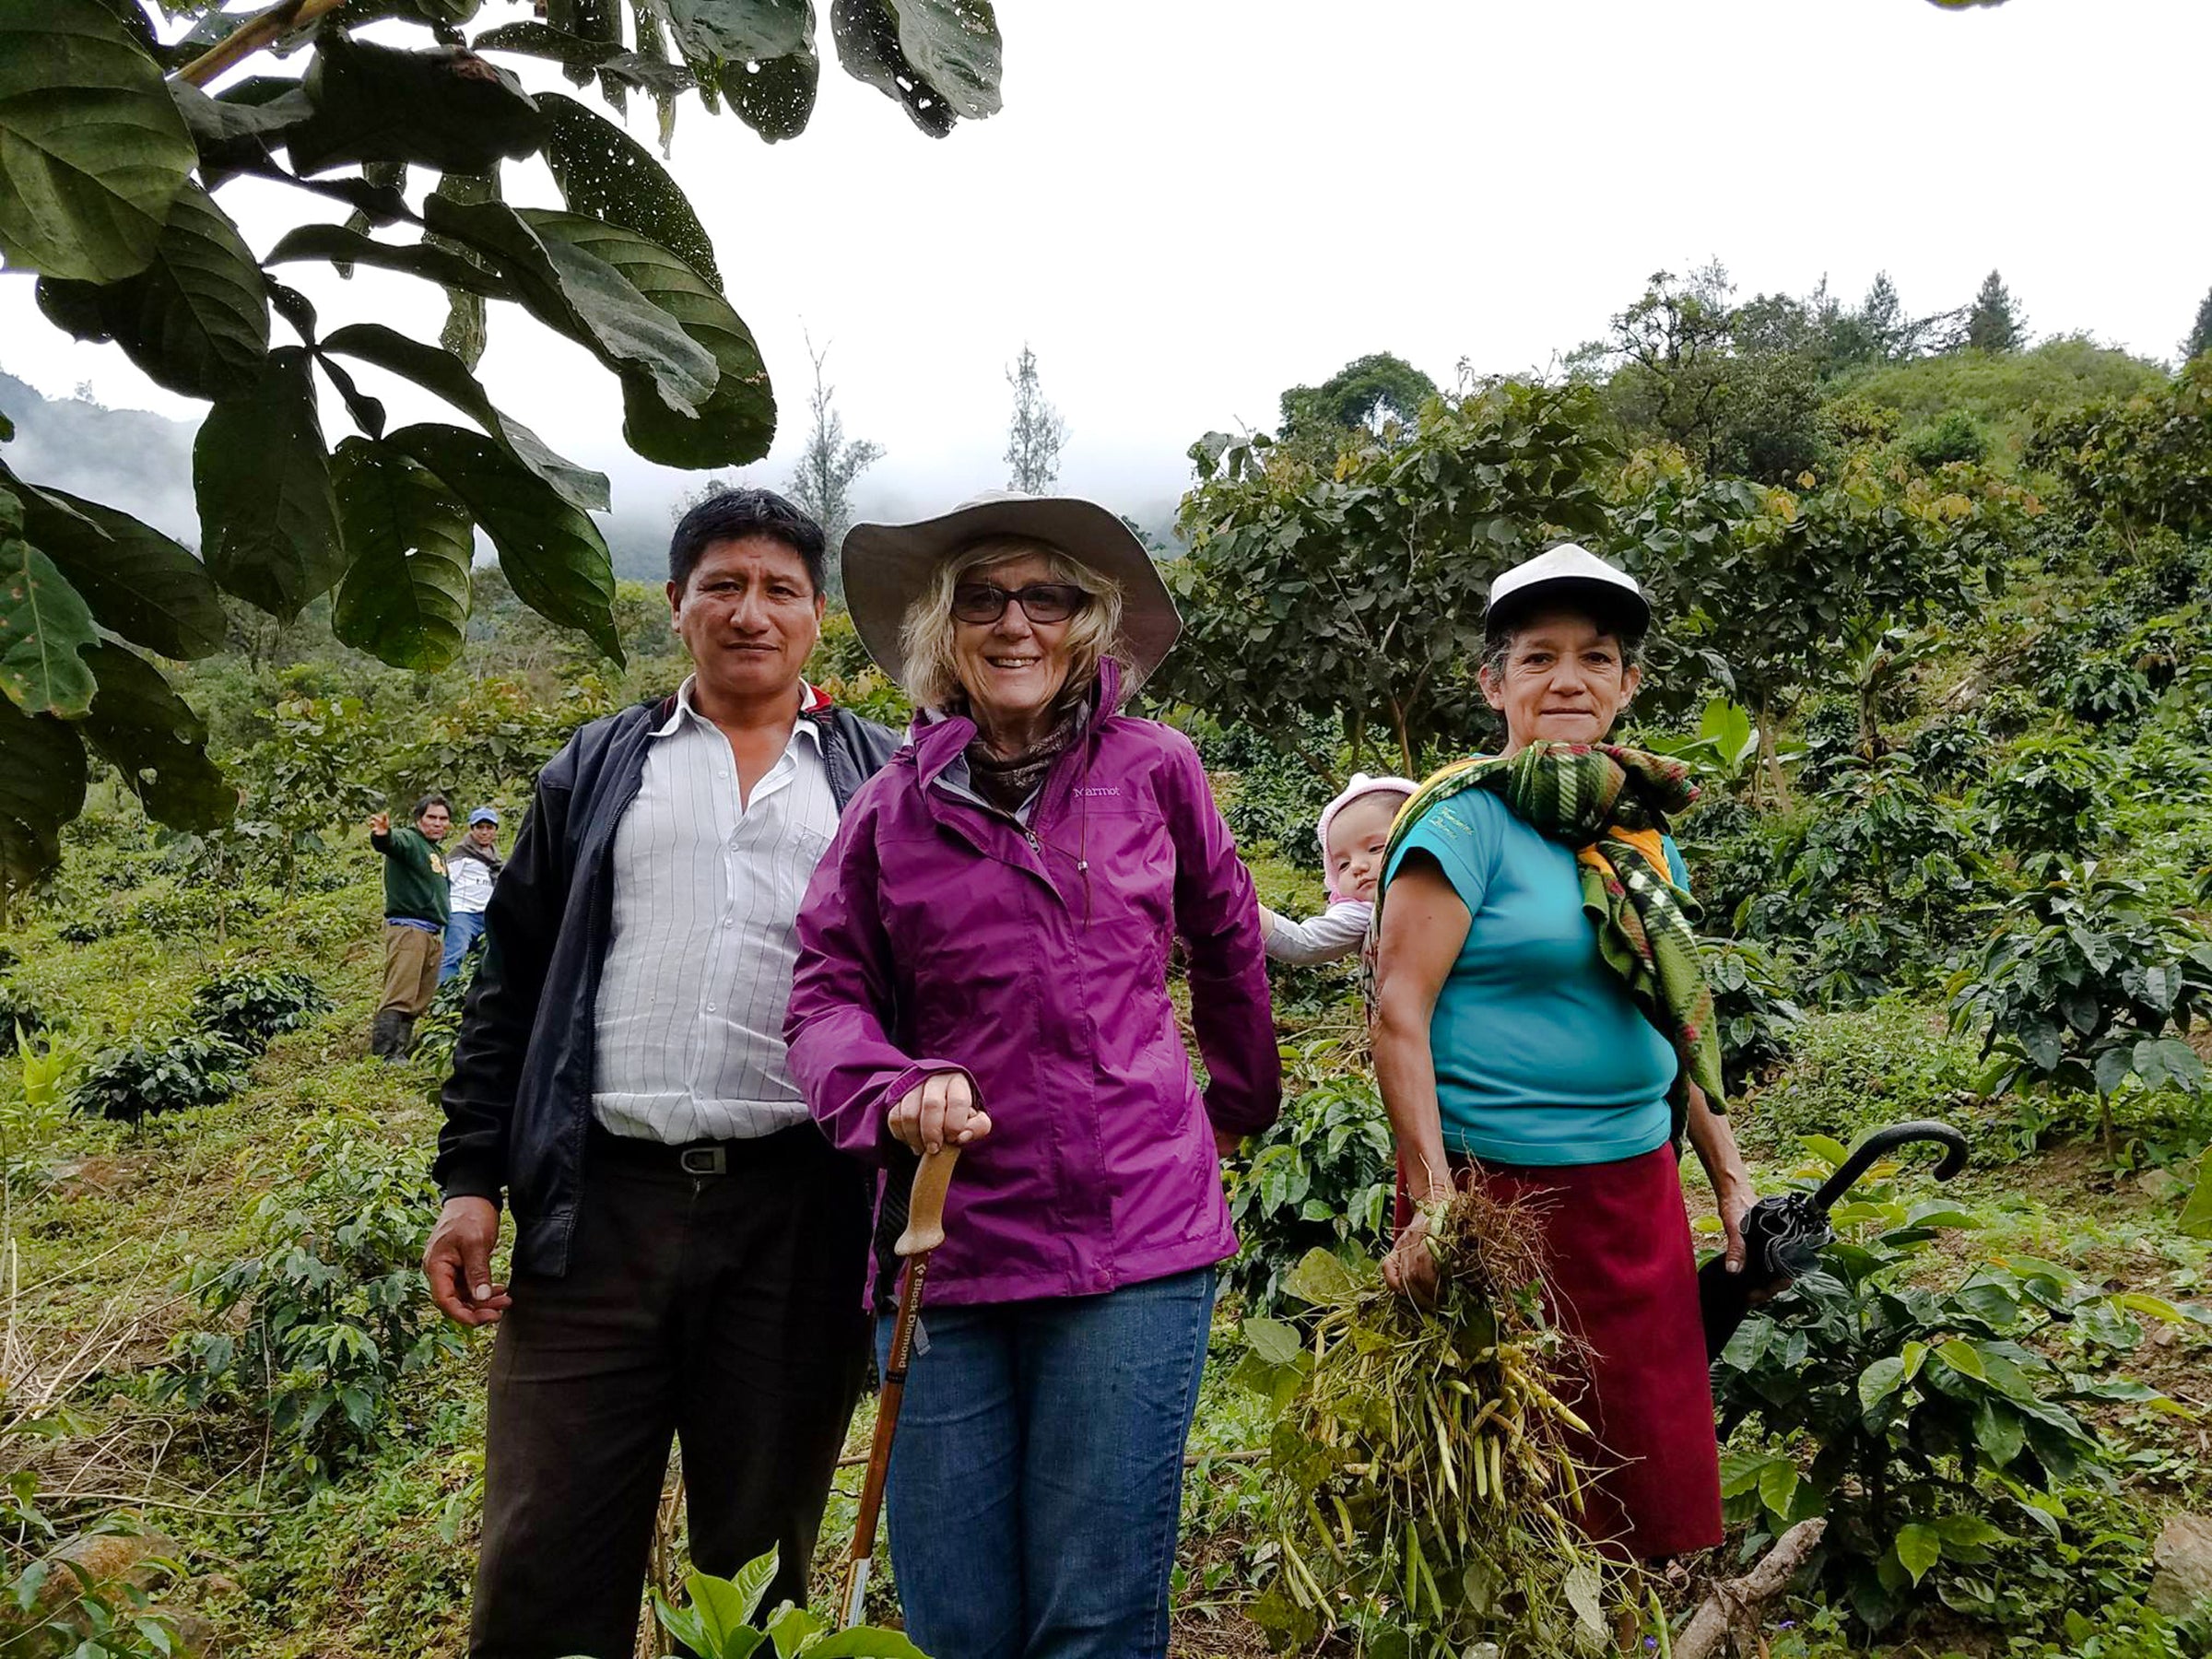 Caffe Ibis fouder, Sally, walking through peruvian coffee farm with coffee farmers/producers.